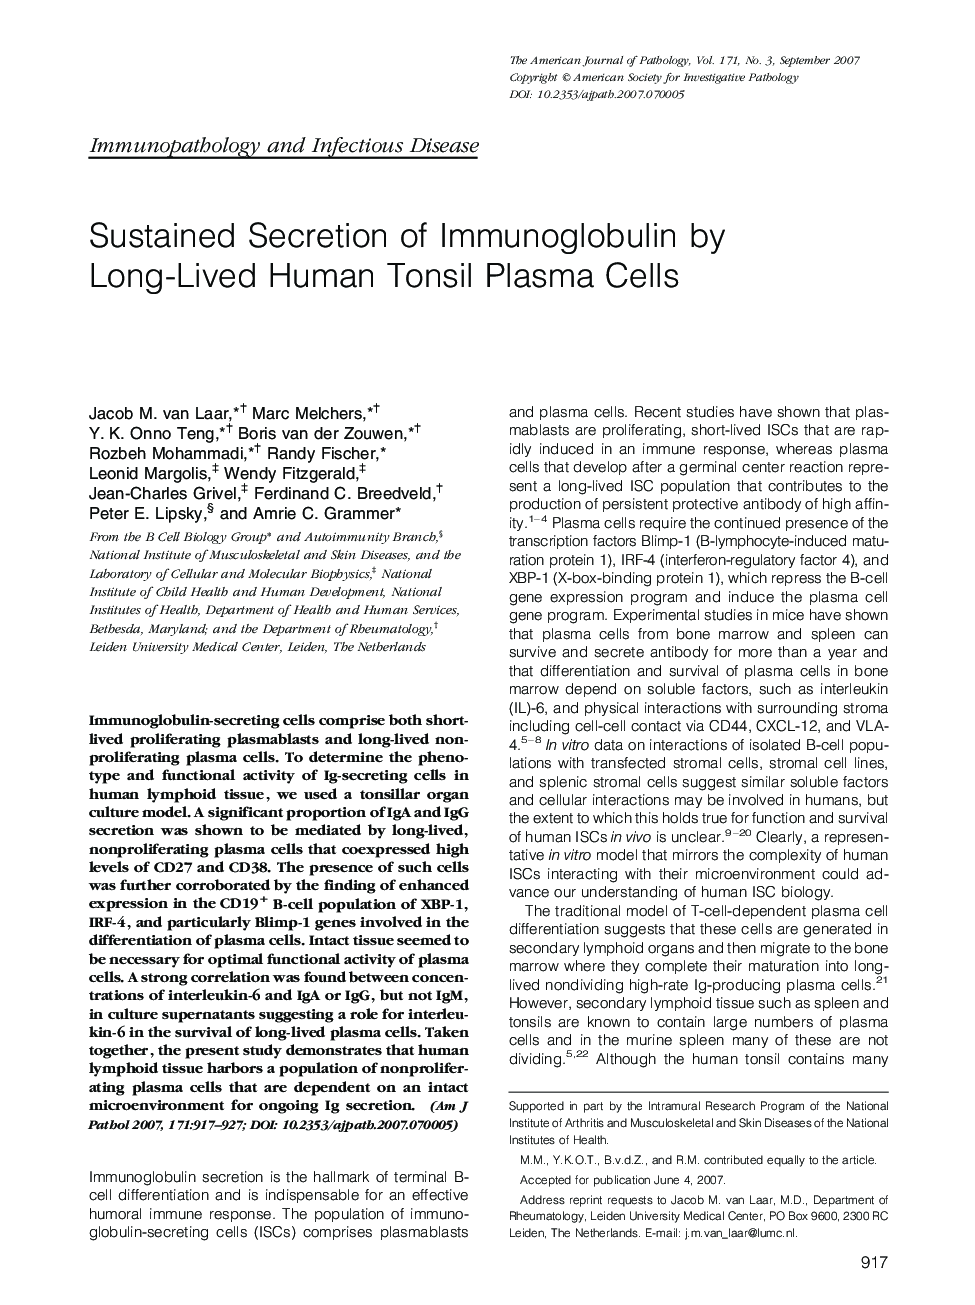 Regular ArticlesSustained Secretion of Immunoglobulin by Long-Lived Human Tonsil Plasma Cells